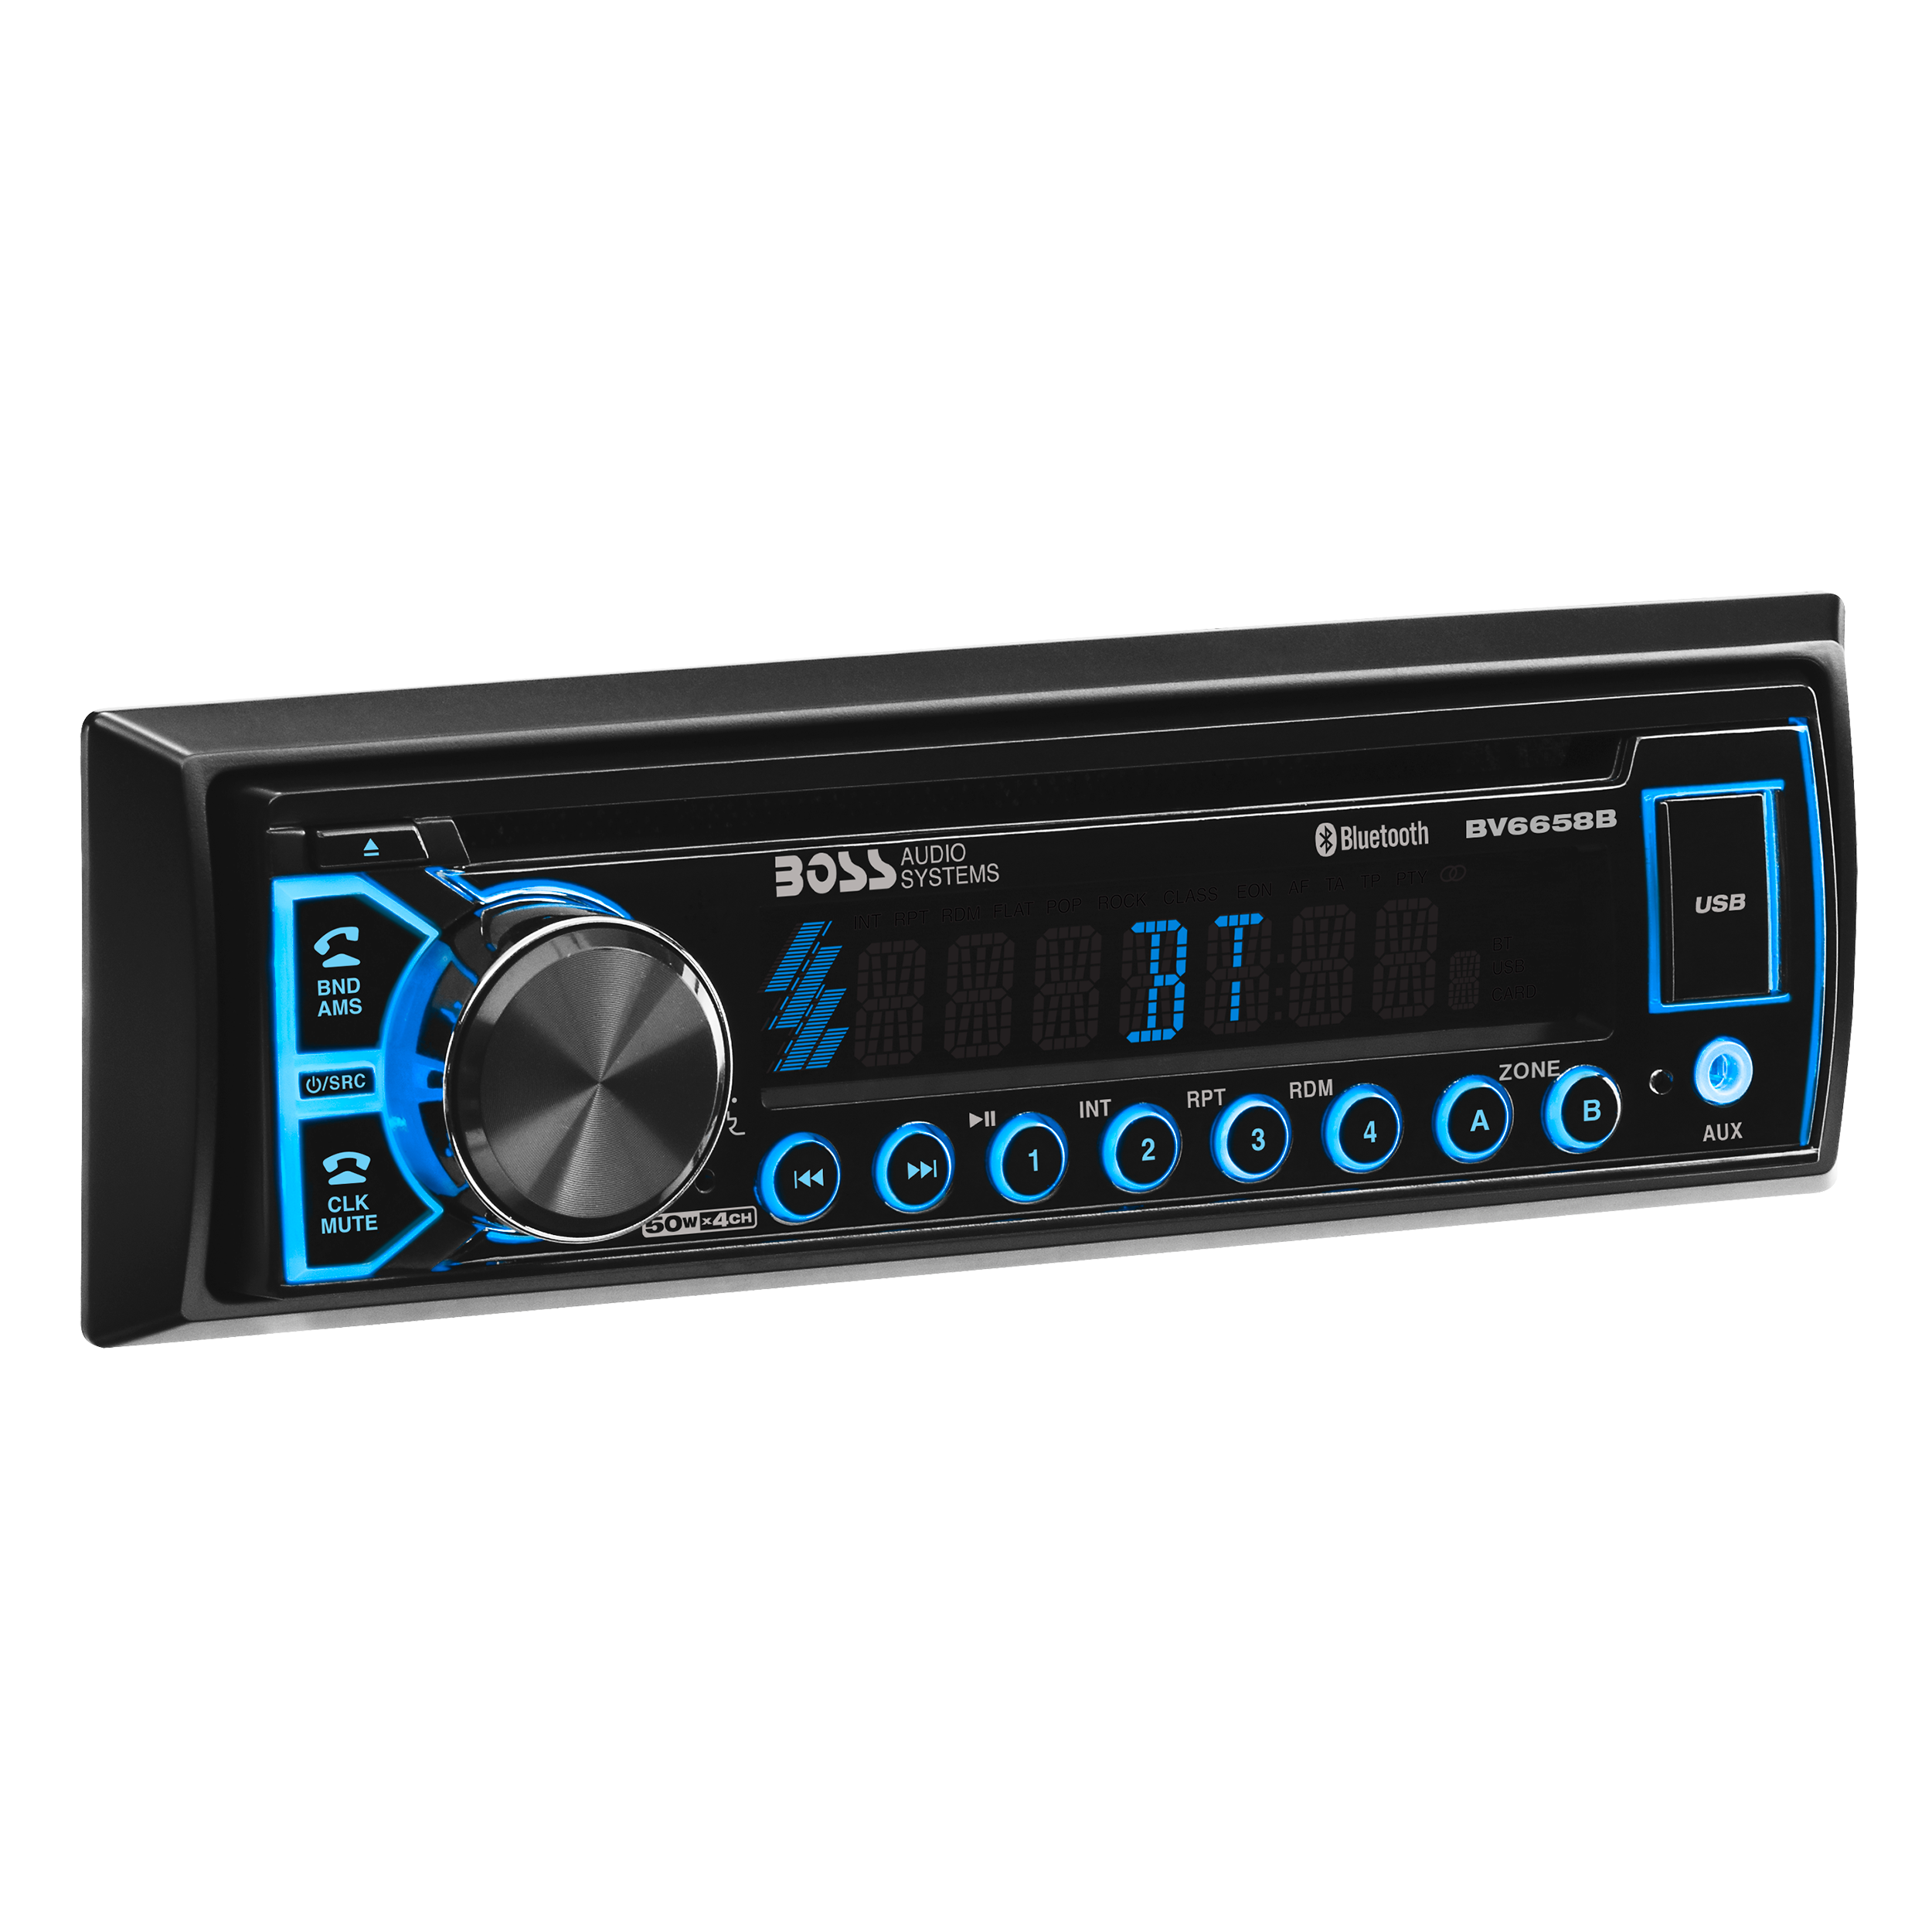 BOSS Audio Systems BV6658B Car Stereo - Single Din, Bluetooth 